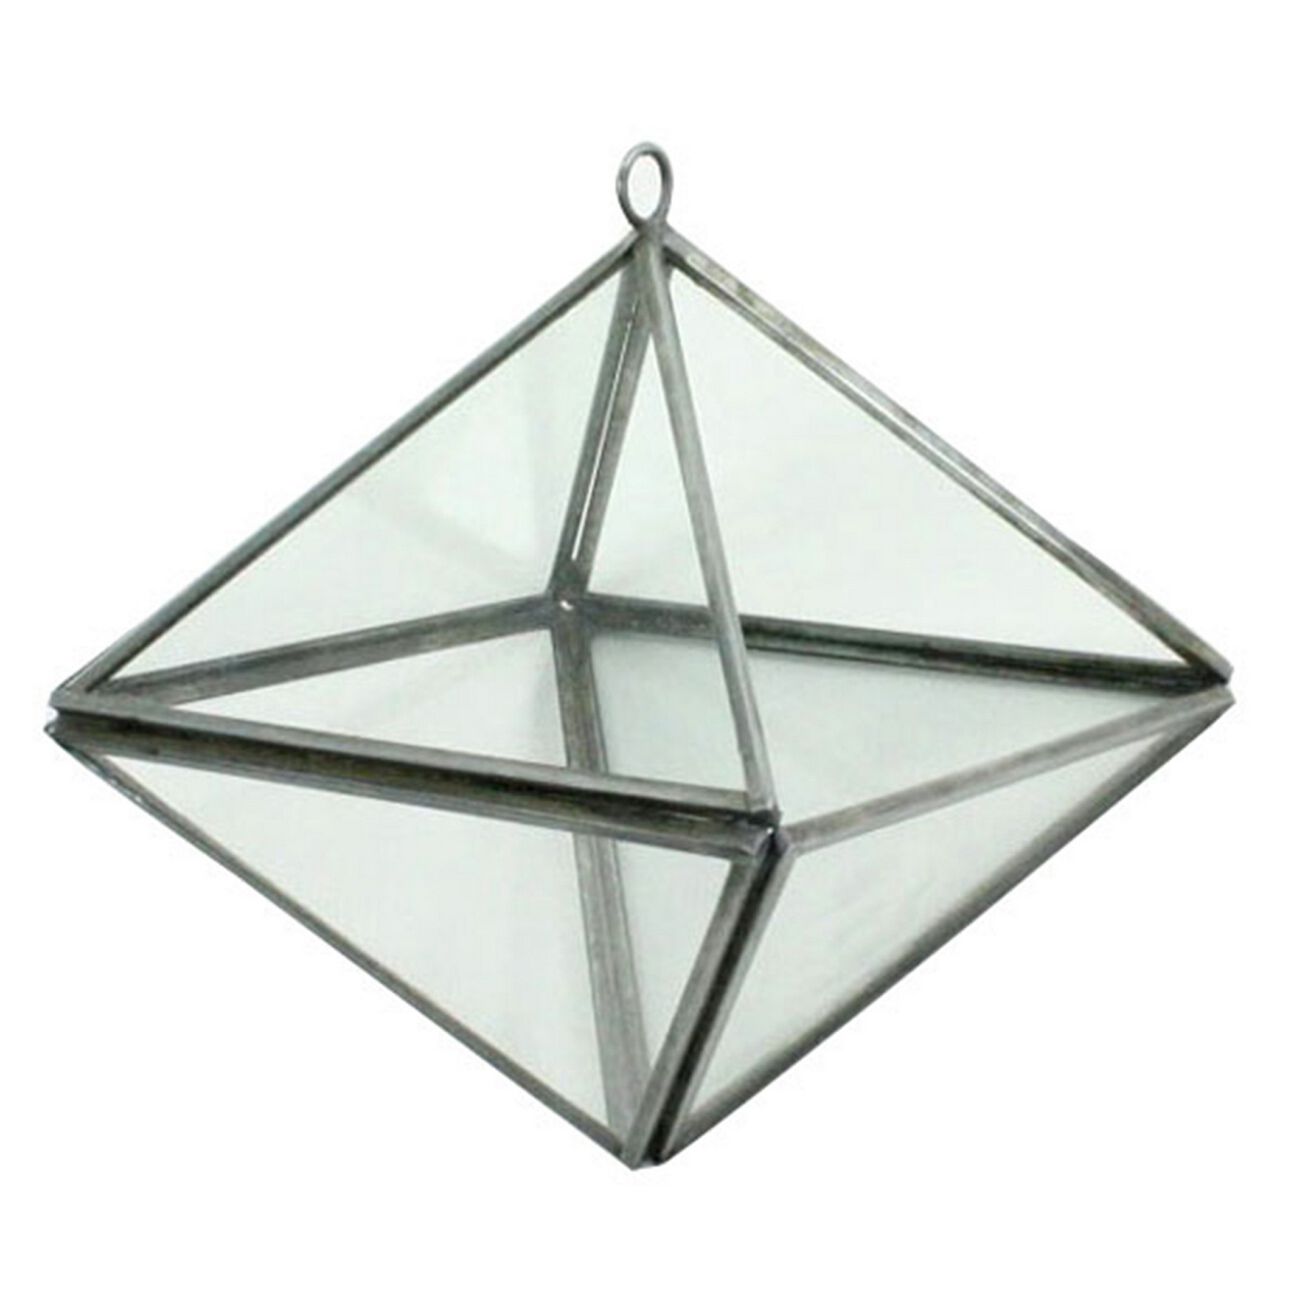 6 Inch Metal Octahedron Shaped Terrarium, Gray